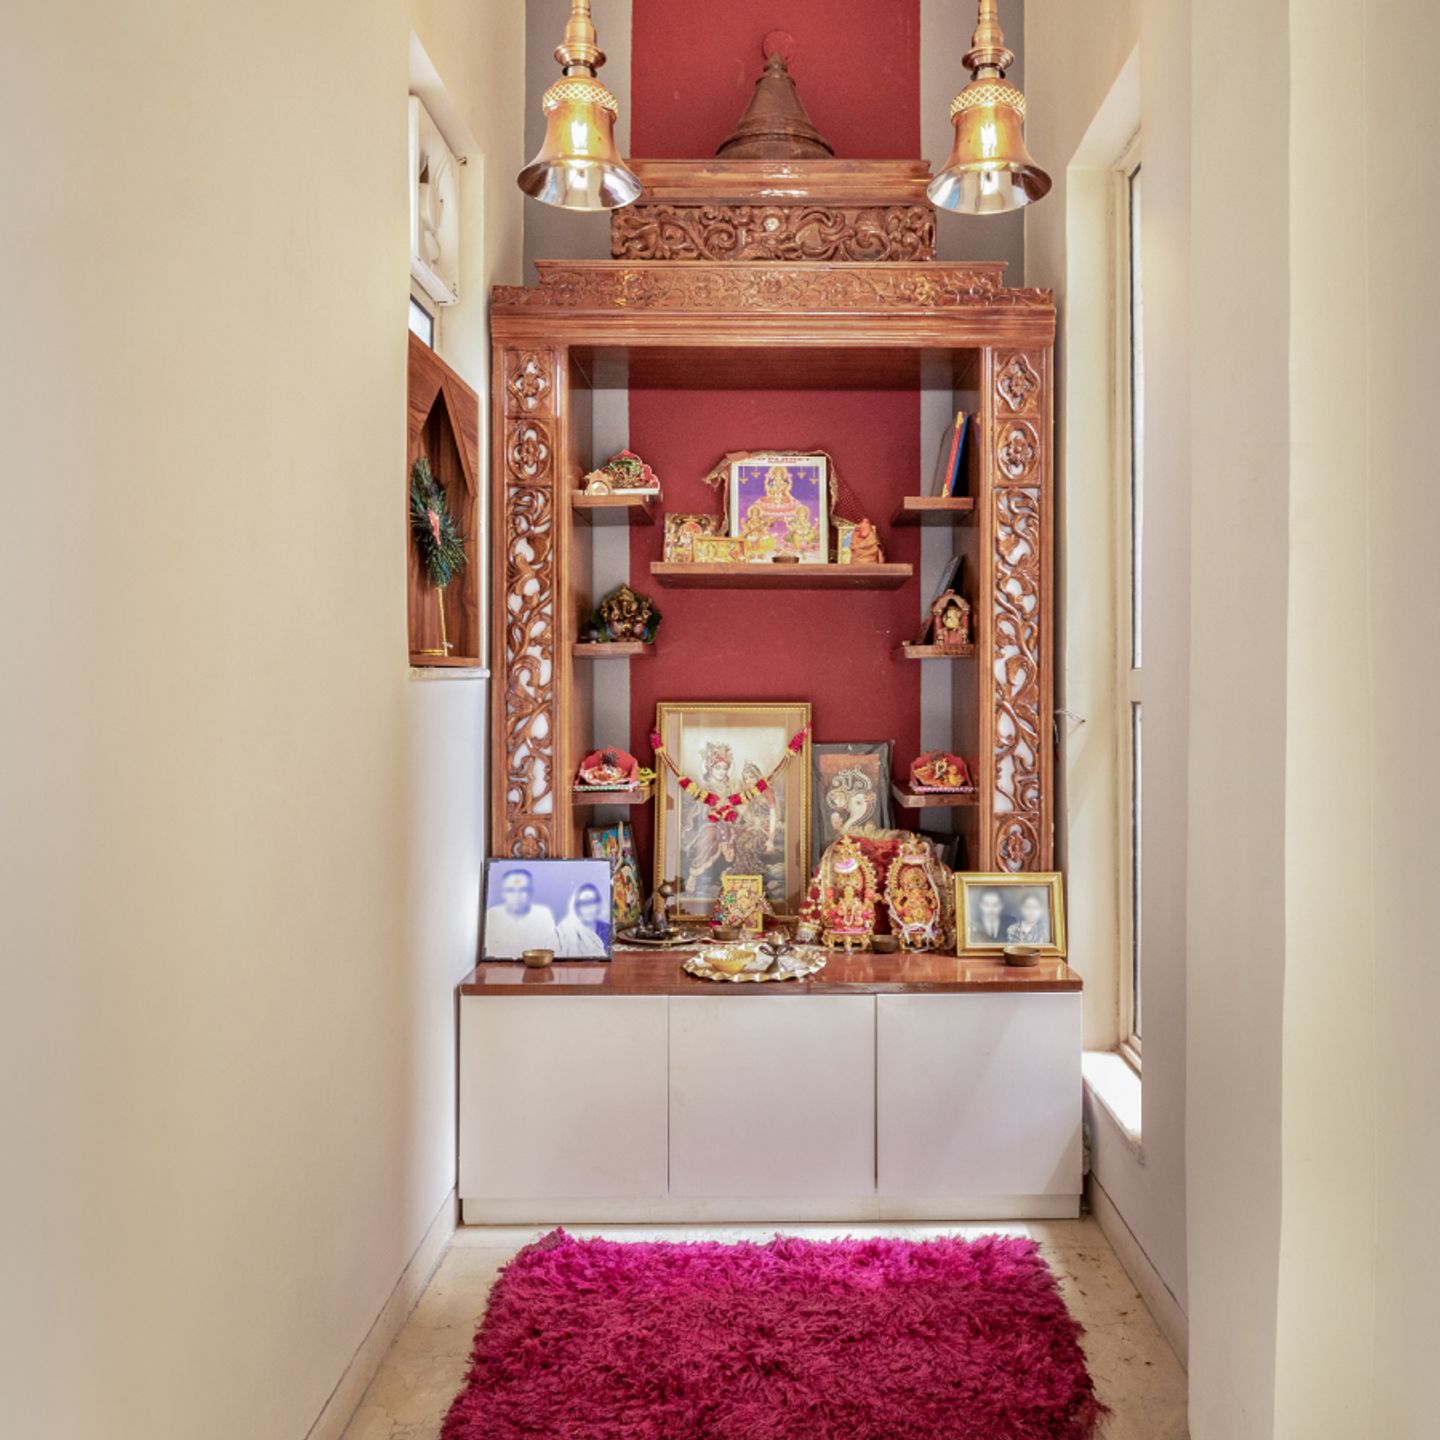 Pooja Room With Traditional Aesthetics - Livspace